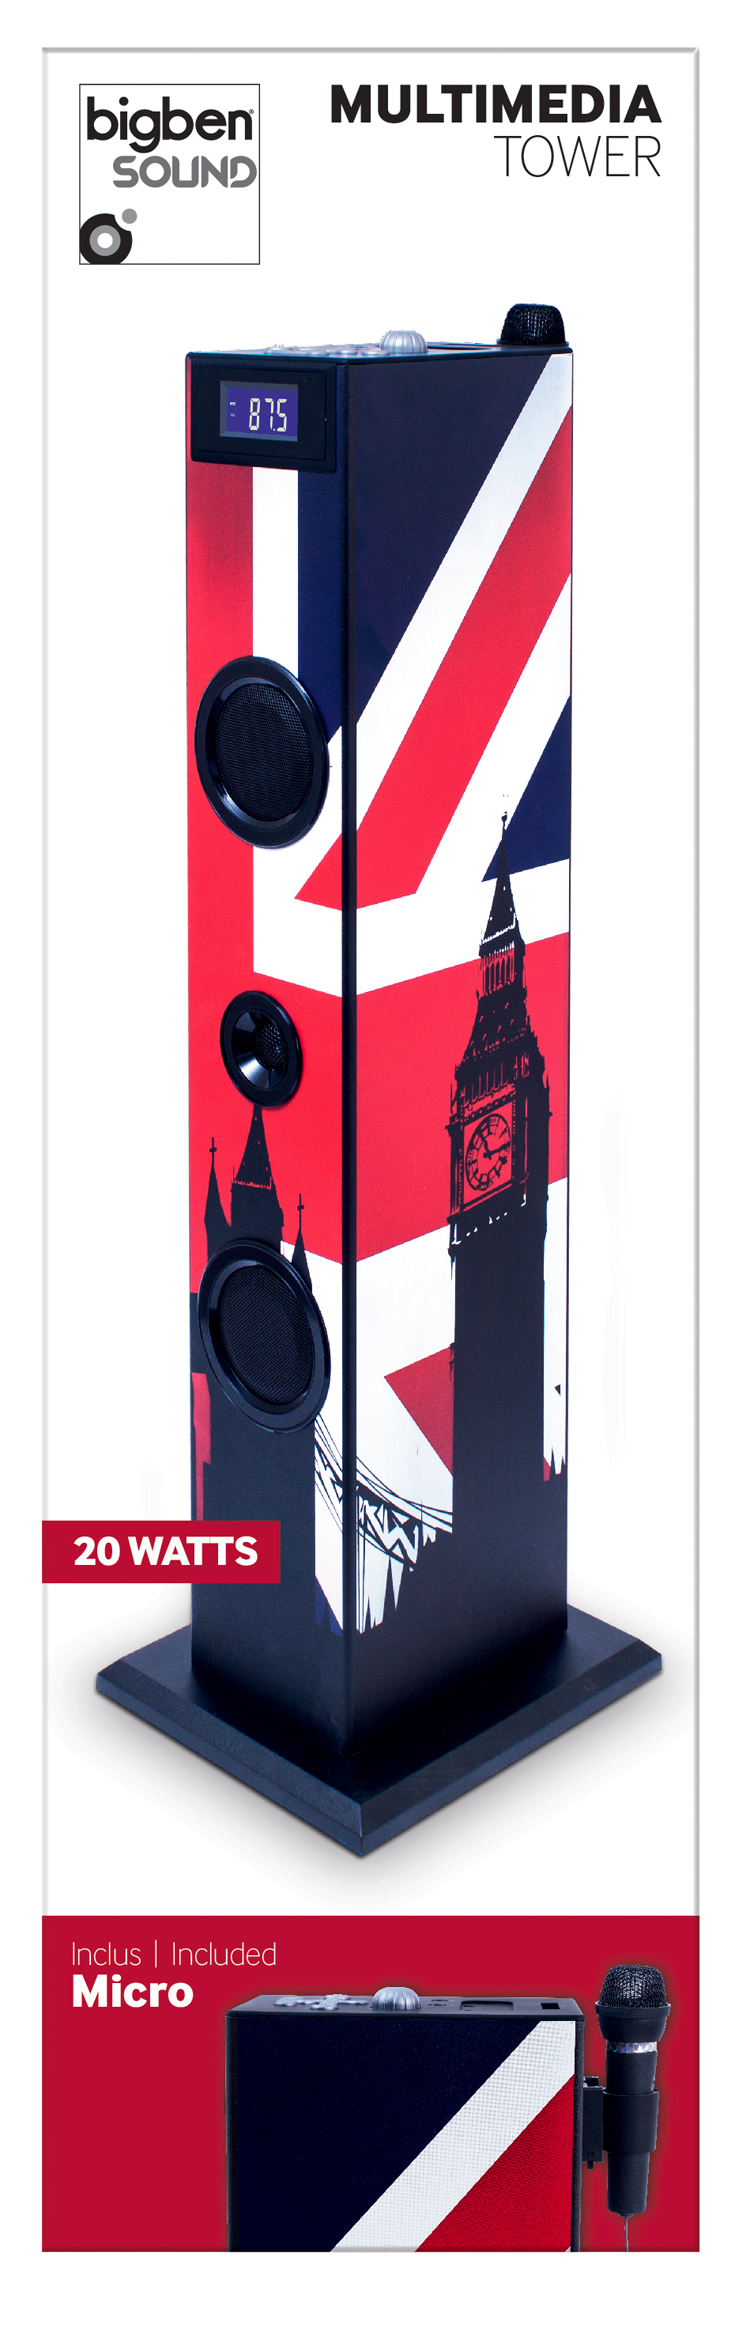 Mutlimedia tower "London" - Image   #1